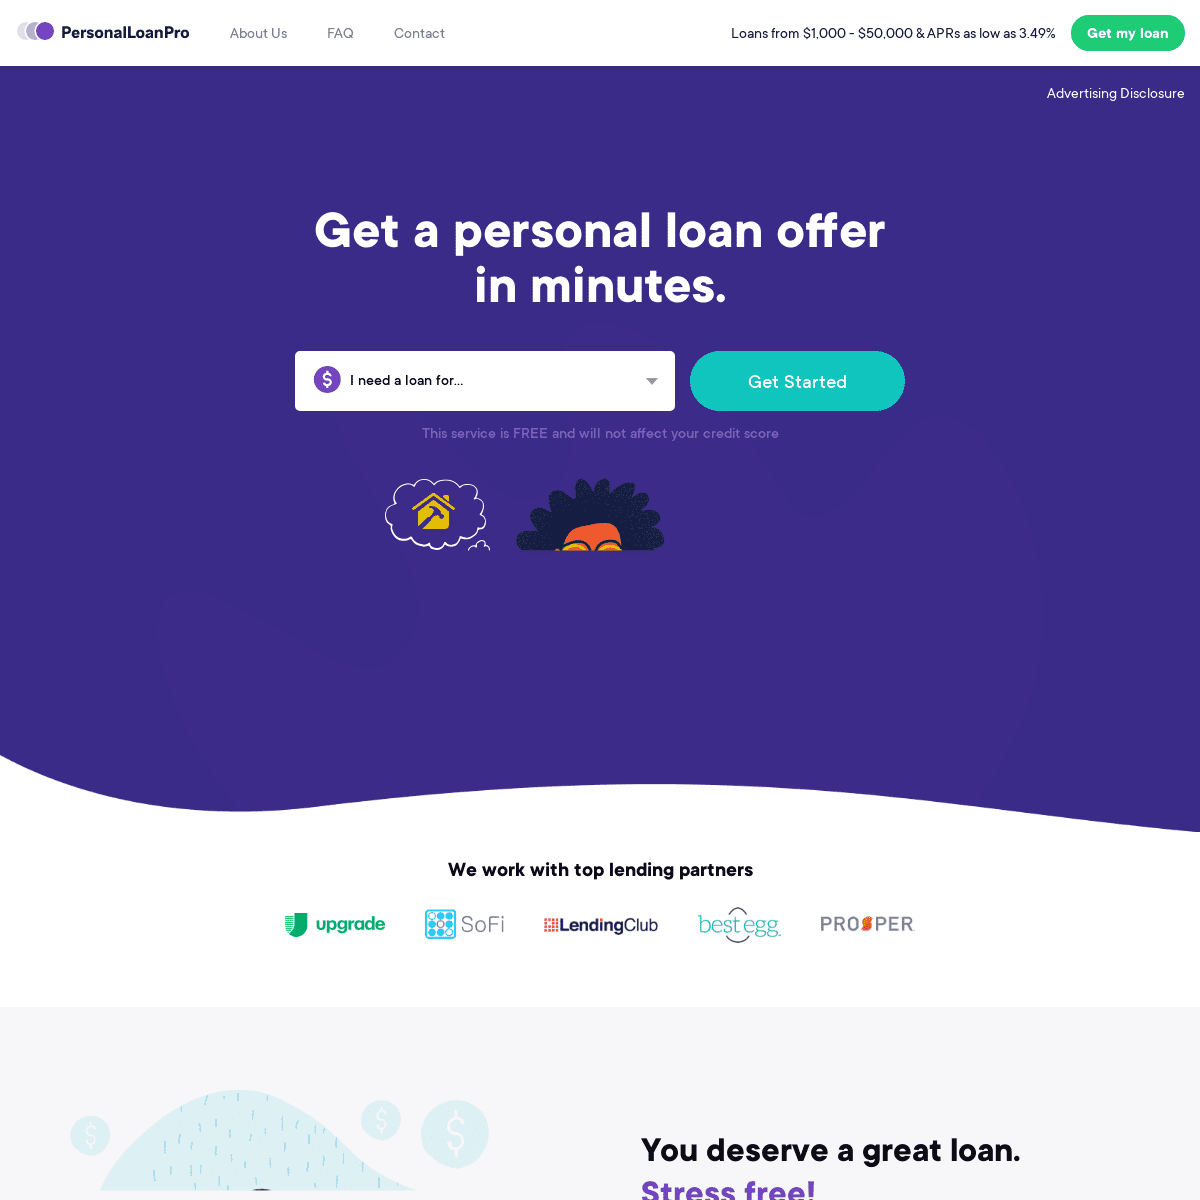 A complete backup of personalloanpro.com